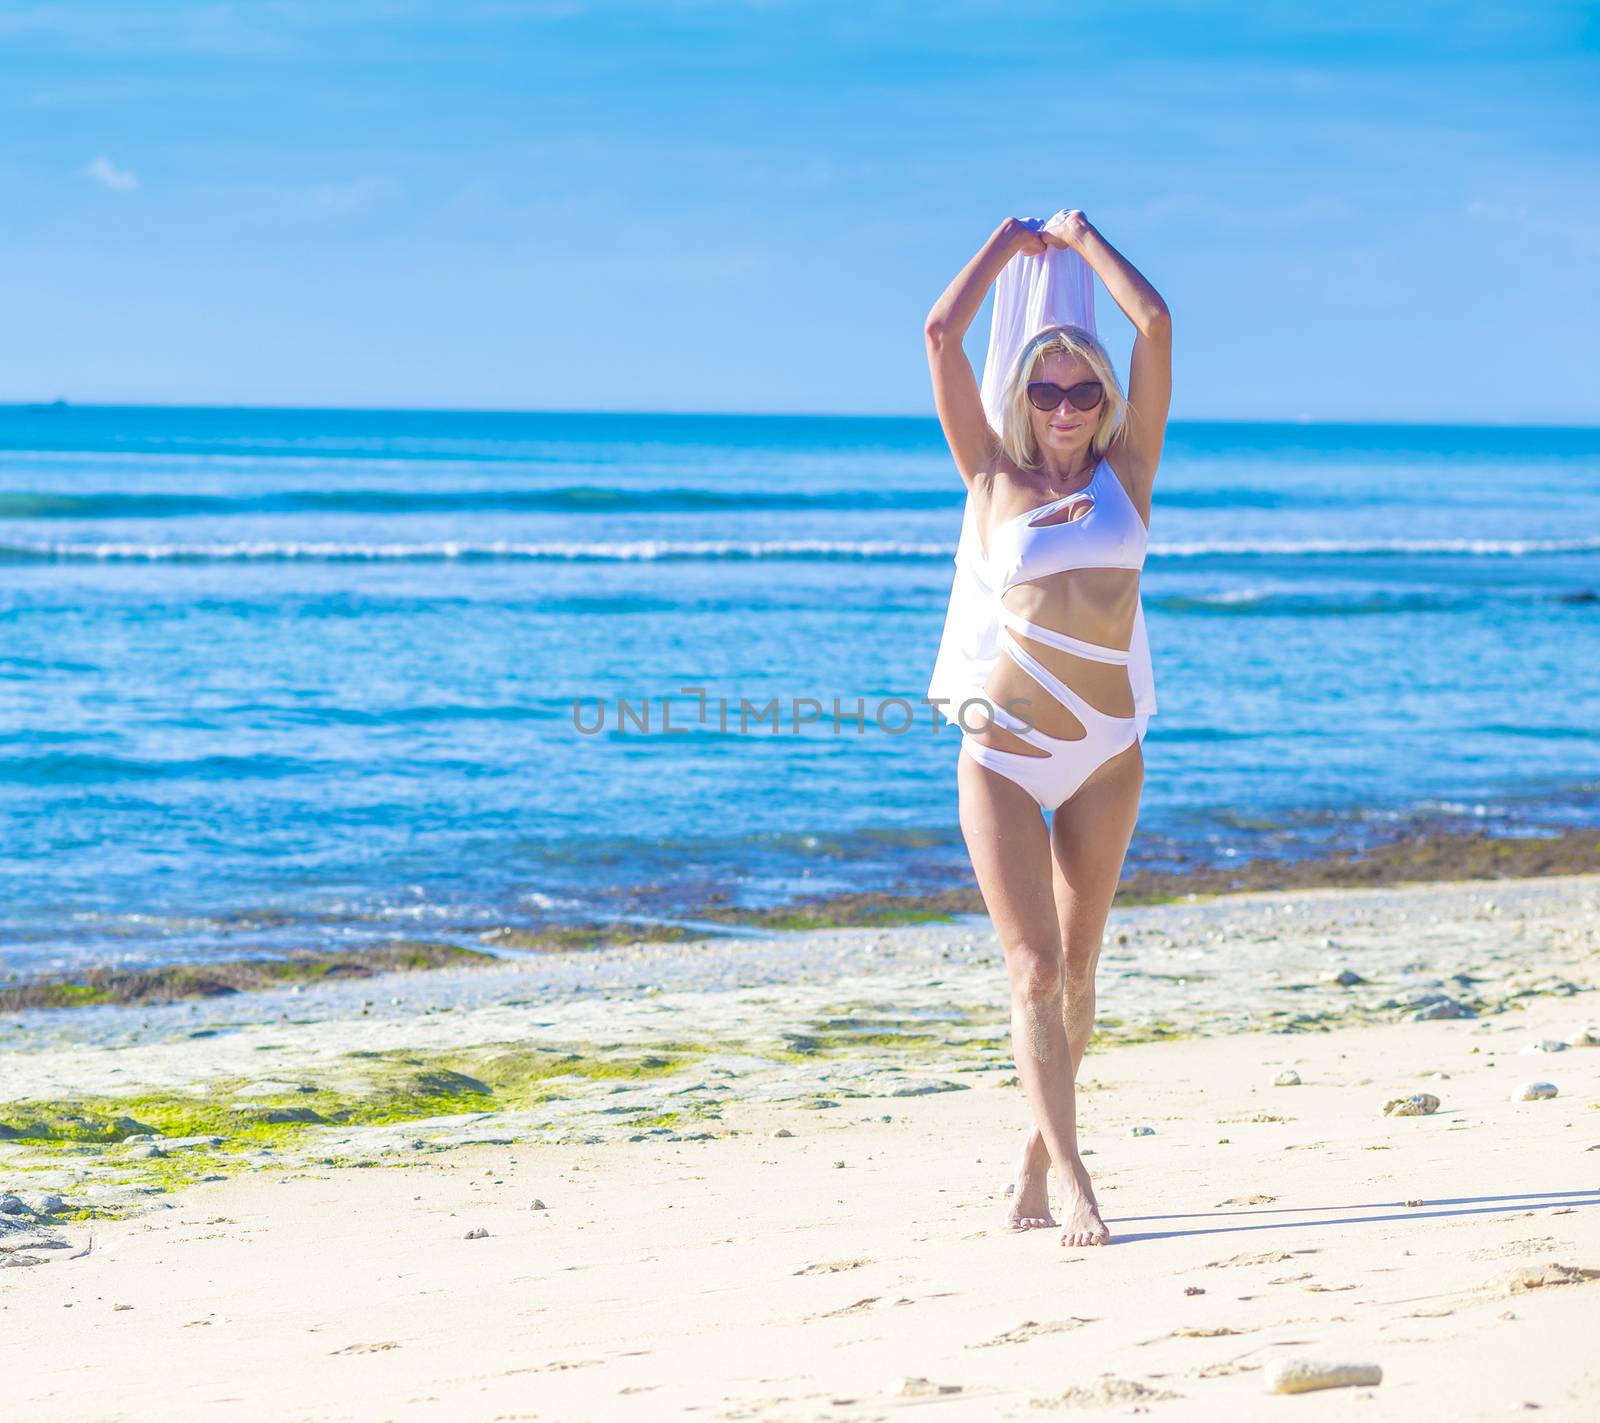 Young Woman in Bikini on a Tropical Sand Beach
released